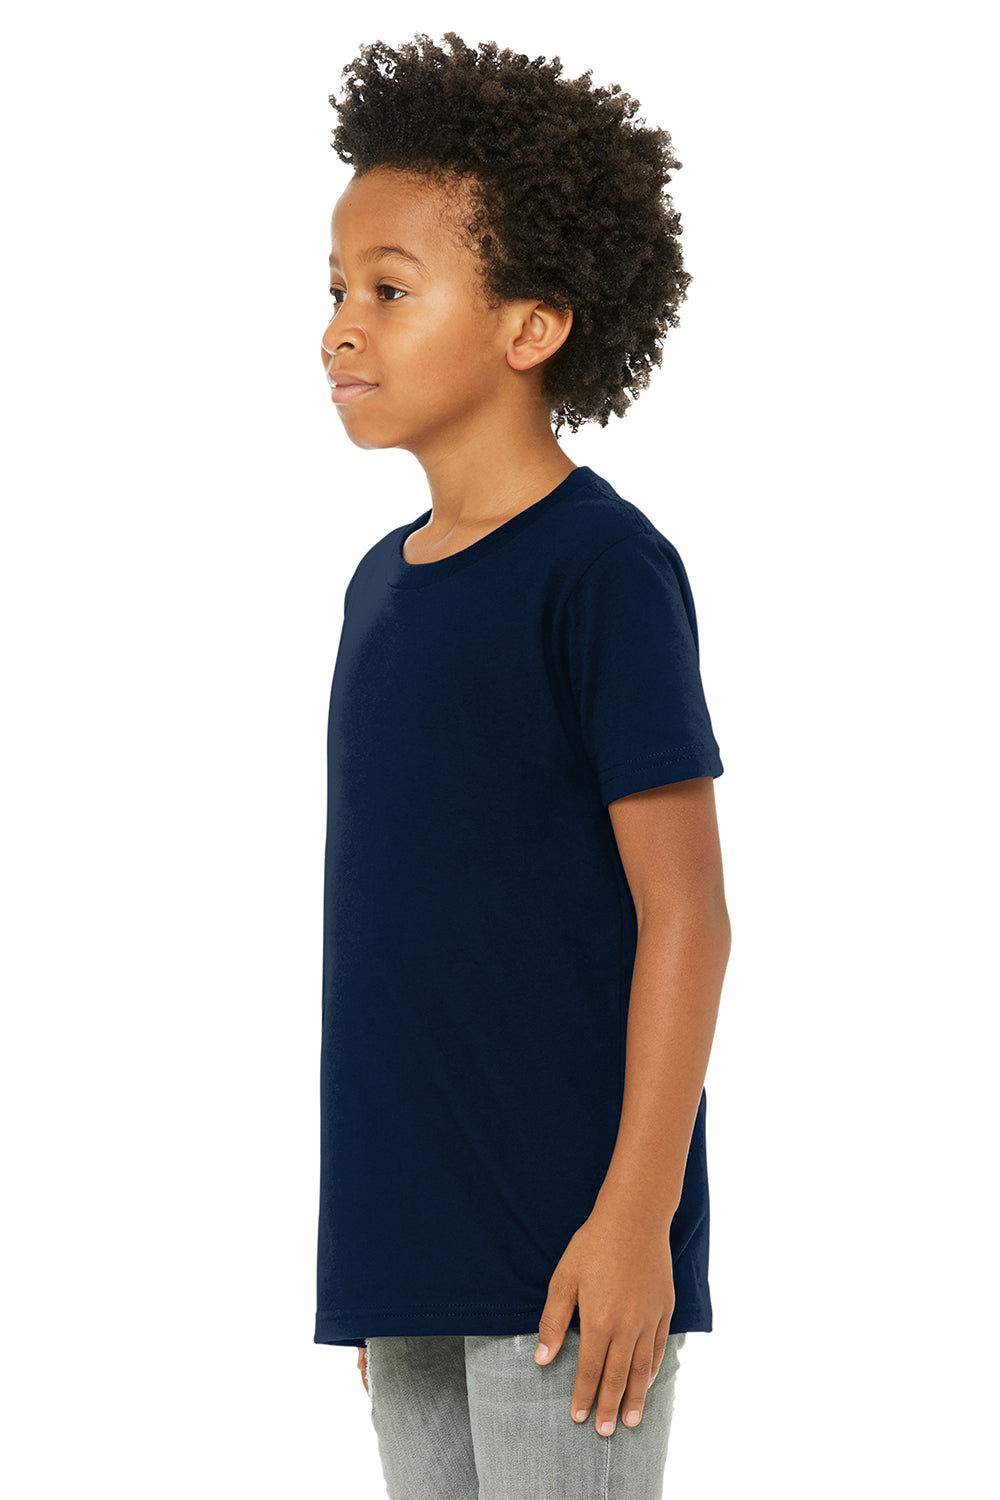 Bella + Canvas 3001Y Youth Jersey Short Sleeve Crewneck T-Shirt Navy Blue Model Side